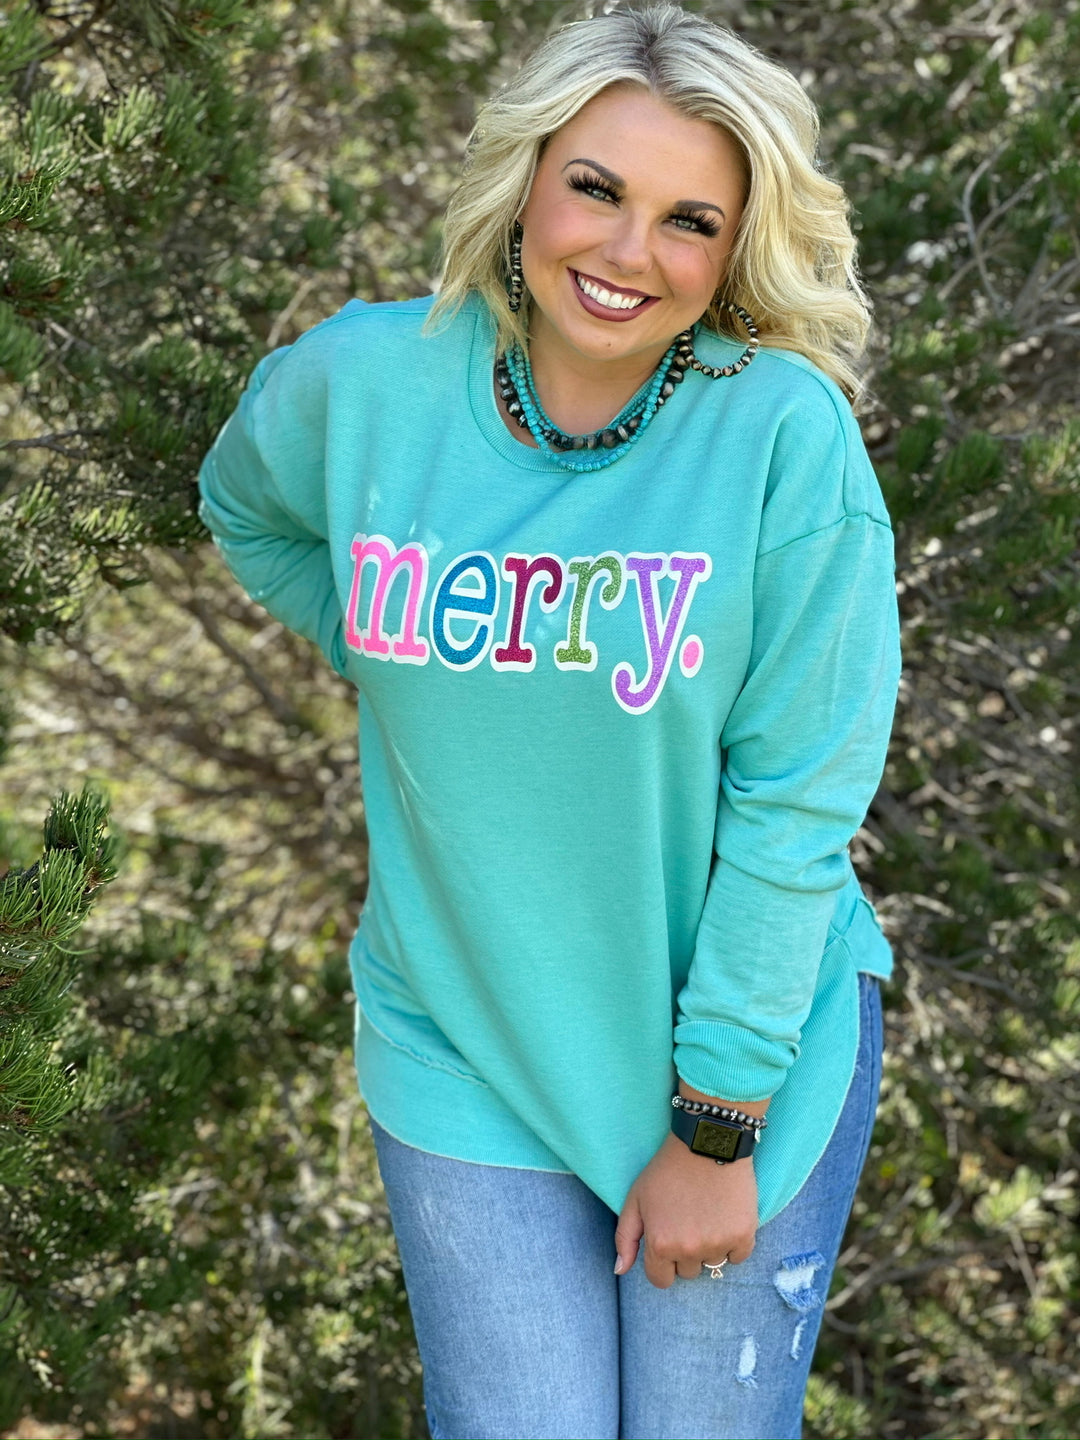 Merry Blue Poncho Sweatshirt by Texas True Threads